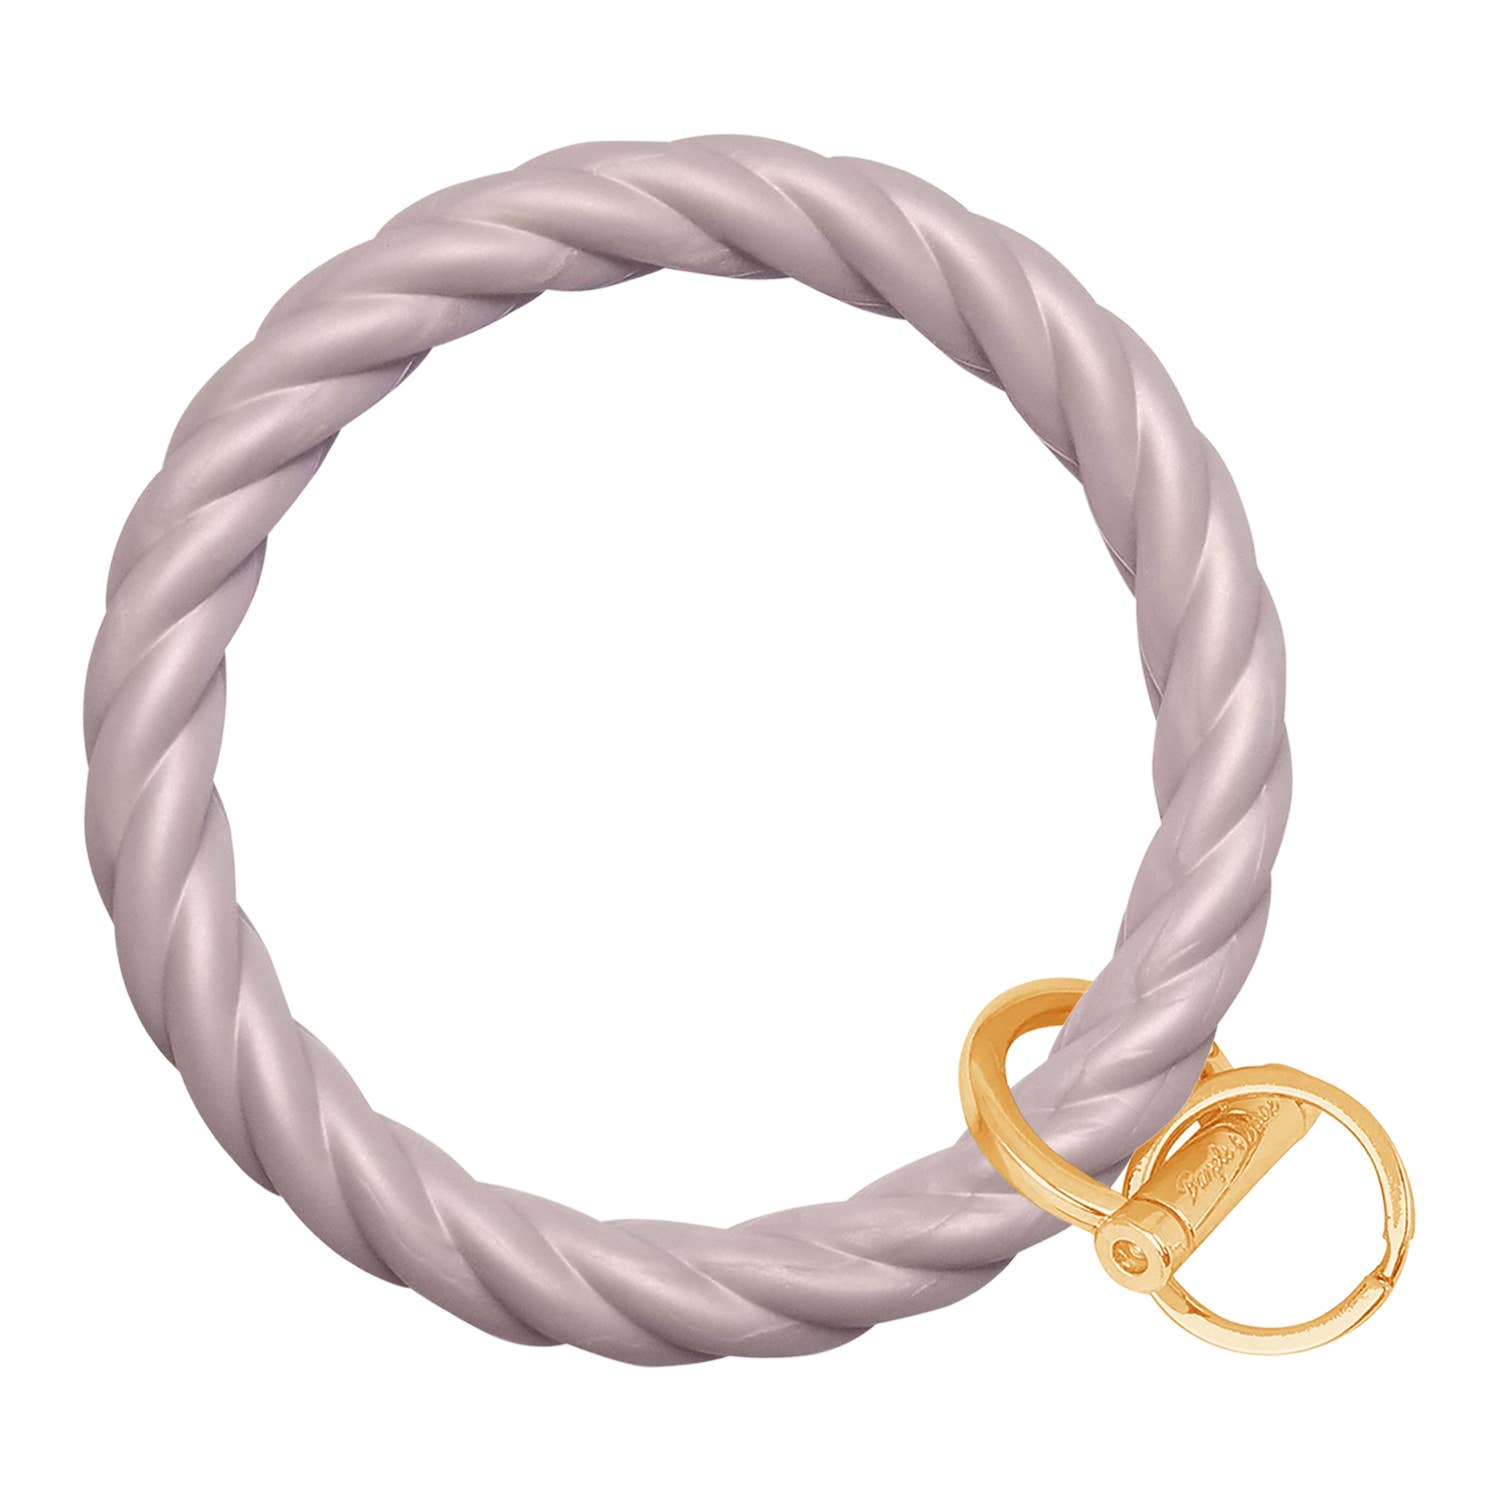 Twist Bracelet Key Ring -colorful, gift, impulse, best sell